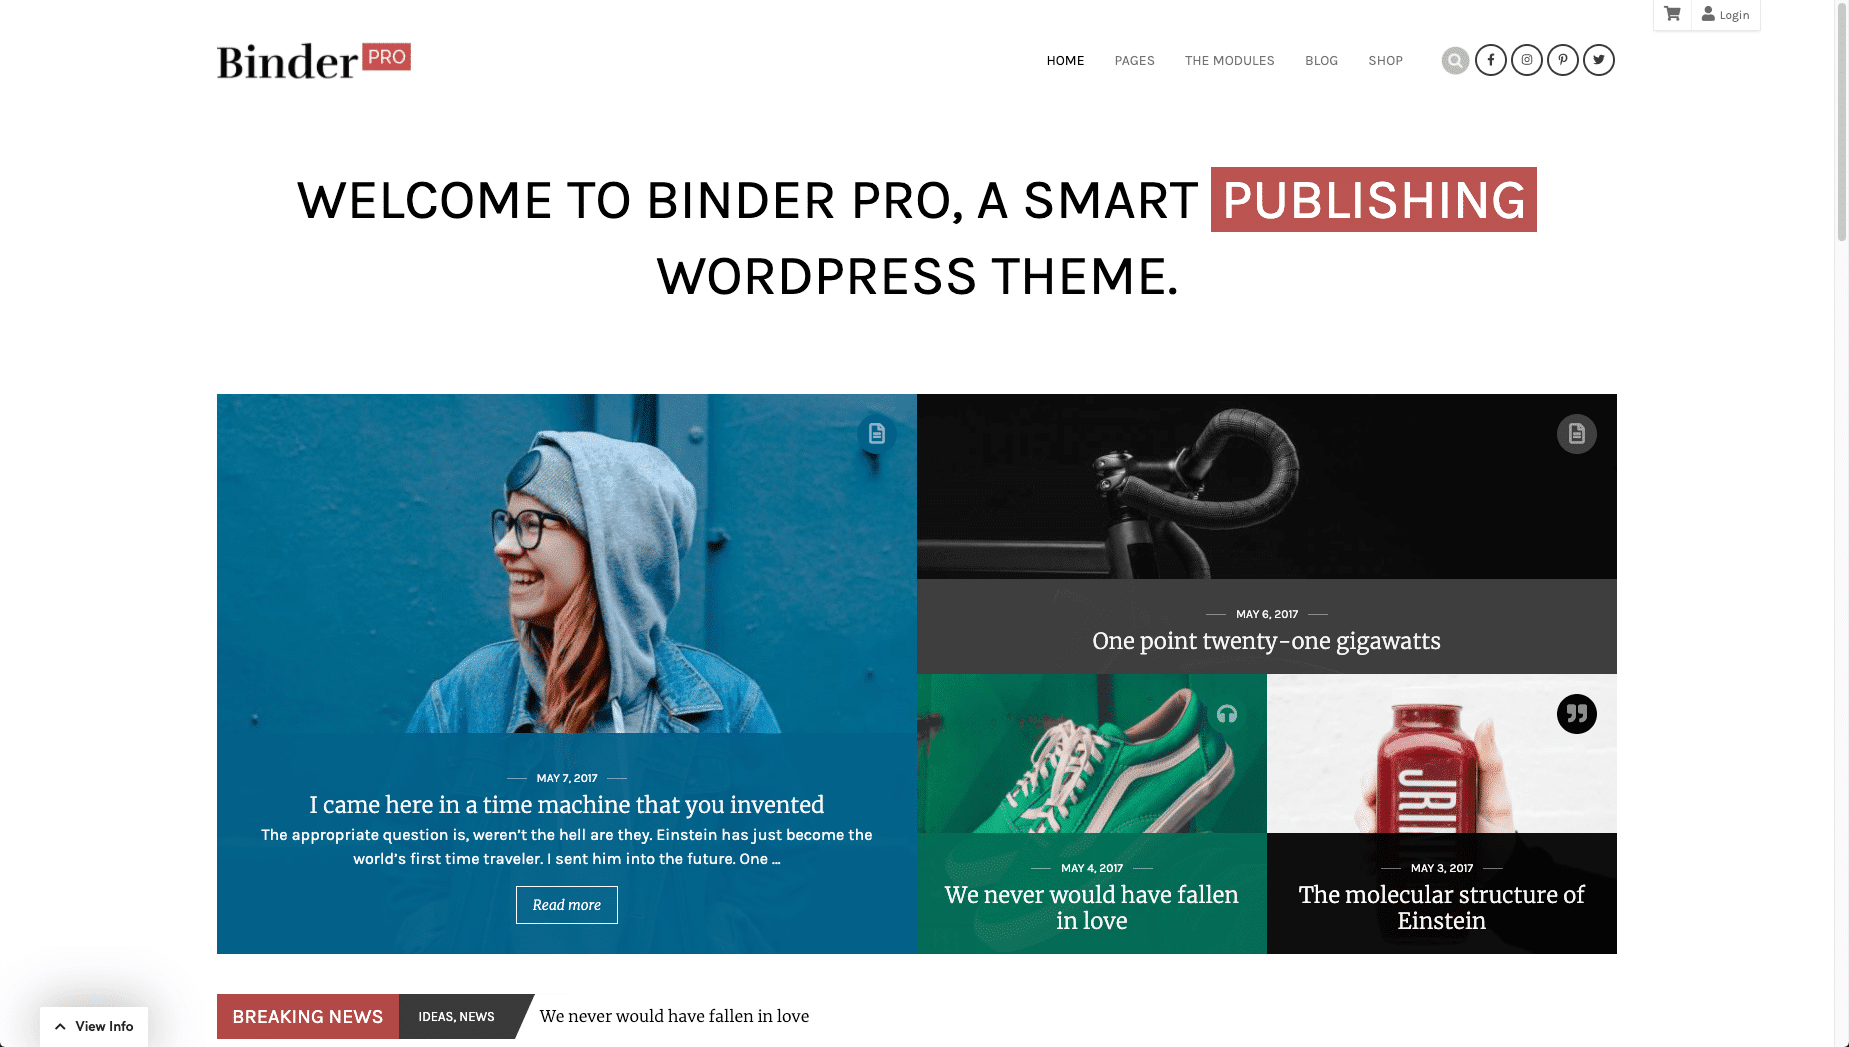 binder pro - WordPress membership theme